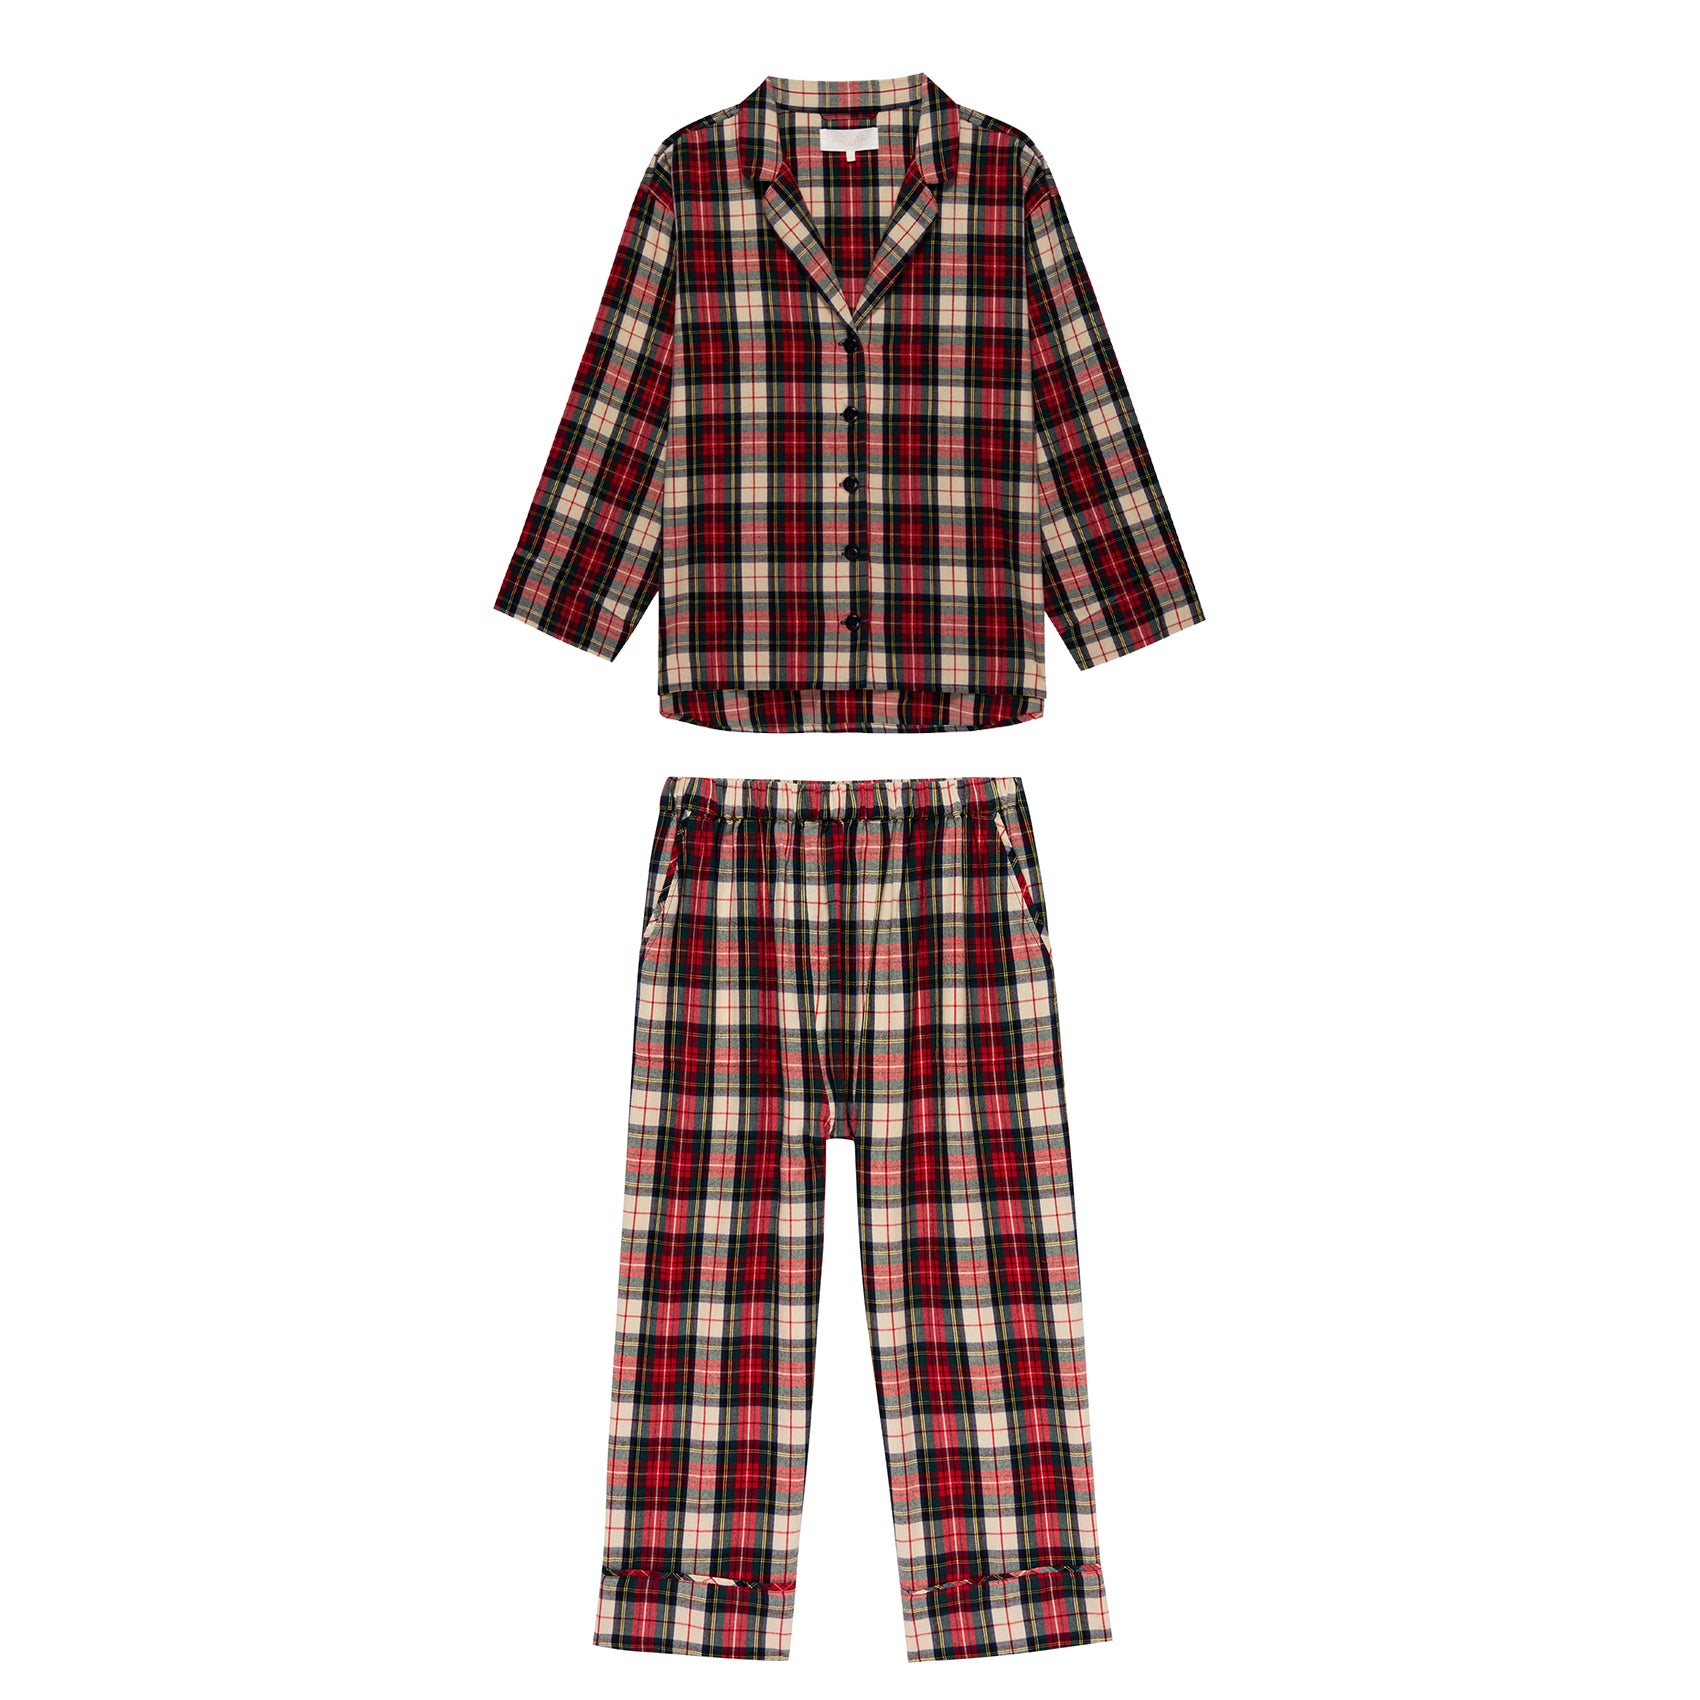 The Pajama Set - Winter Cabin Plaid